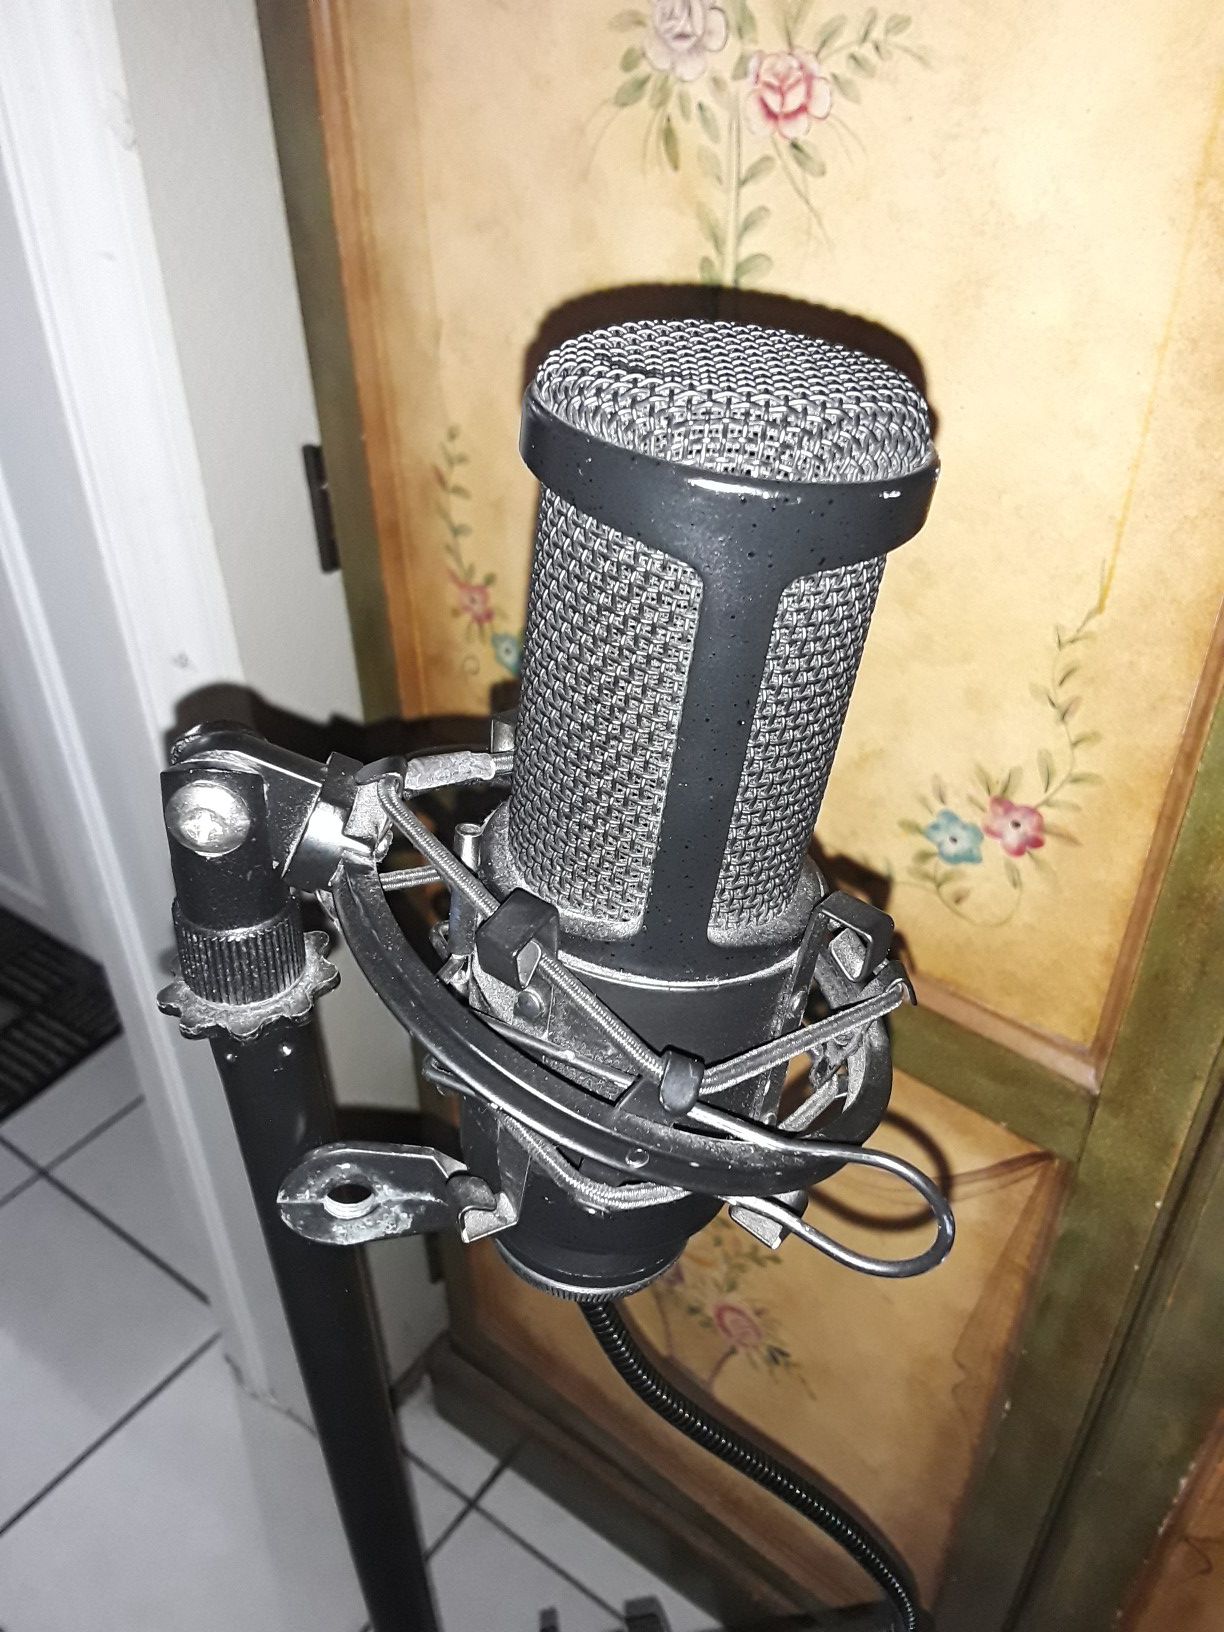 Audio-Technica P48 microphone